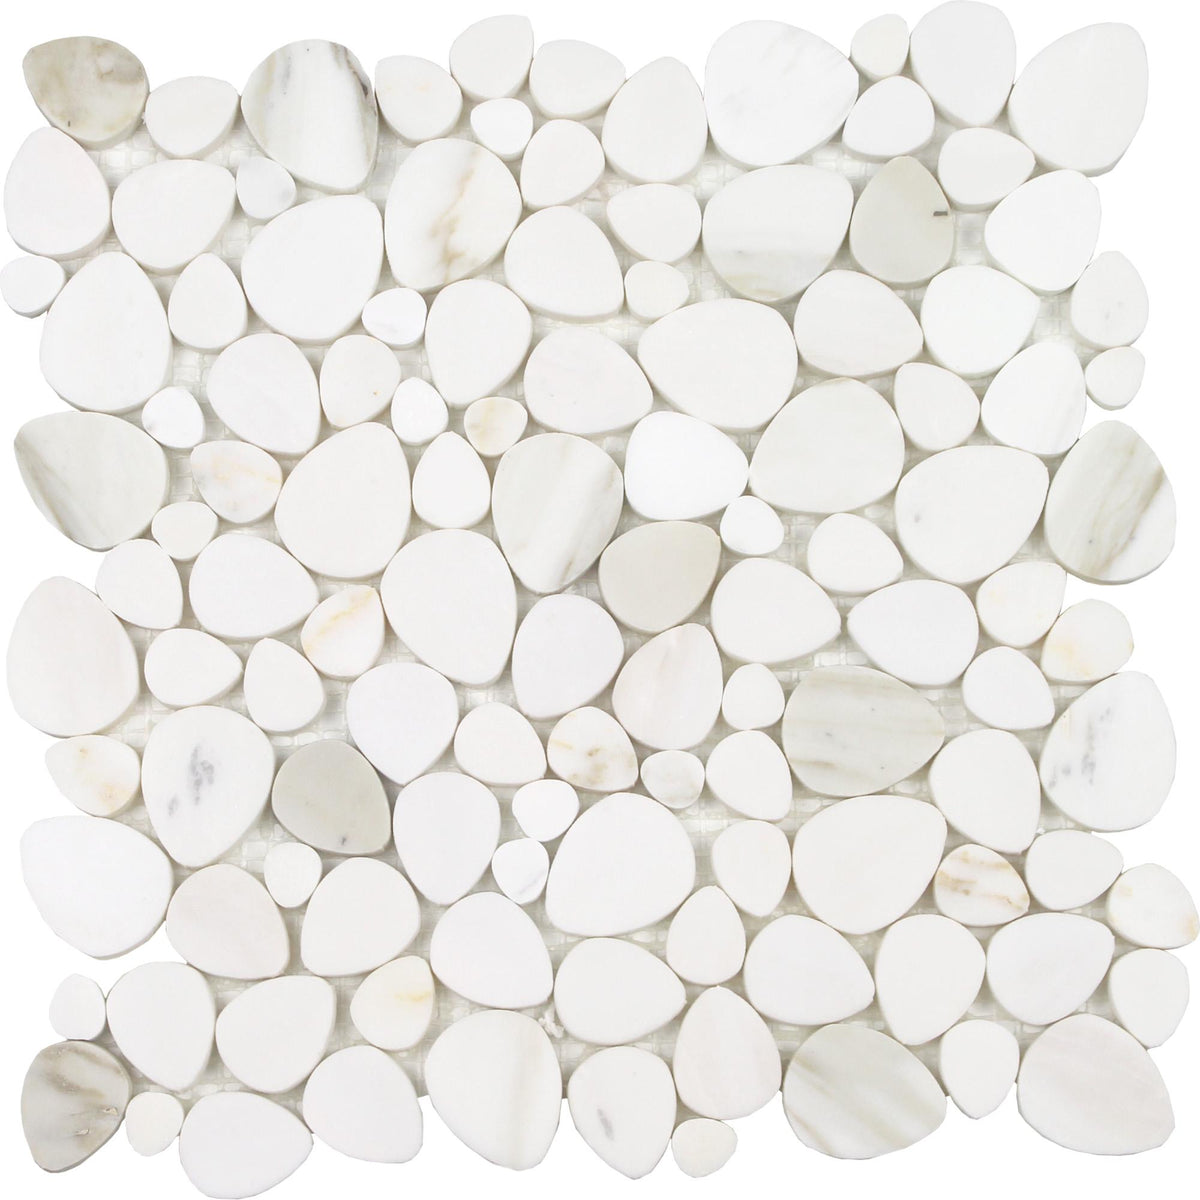 Tesoro - Ocean Stones Collection - Sliced Pebble Mosaic - Calacatta Gold Italian White